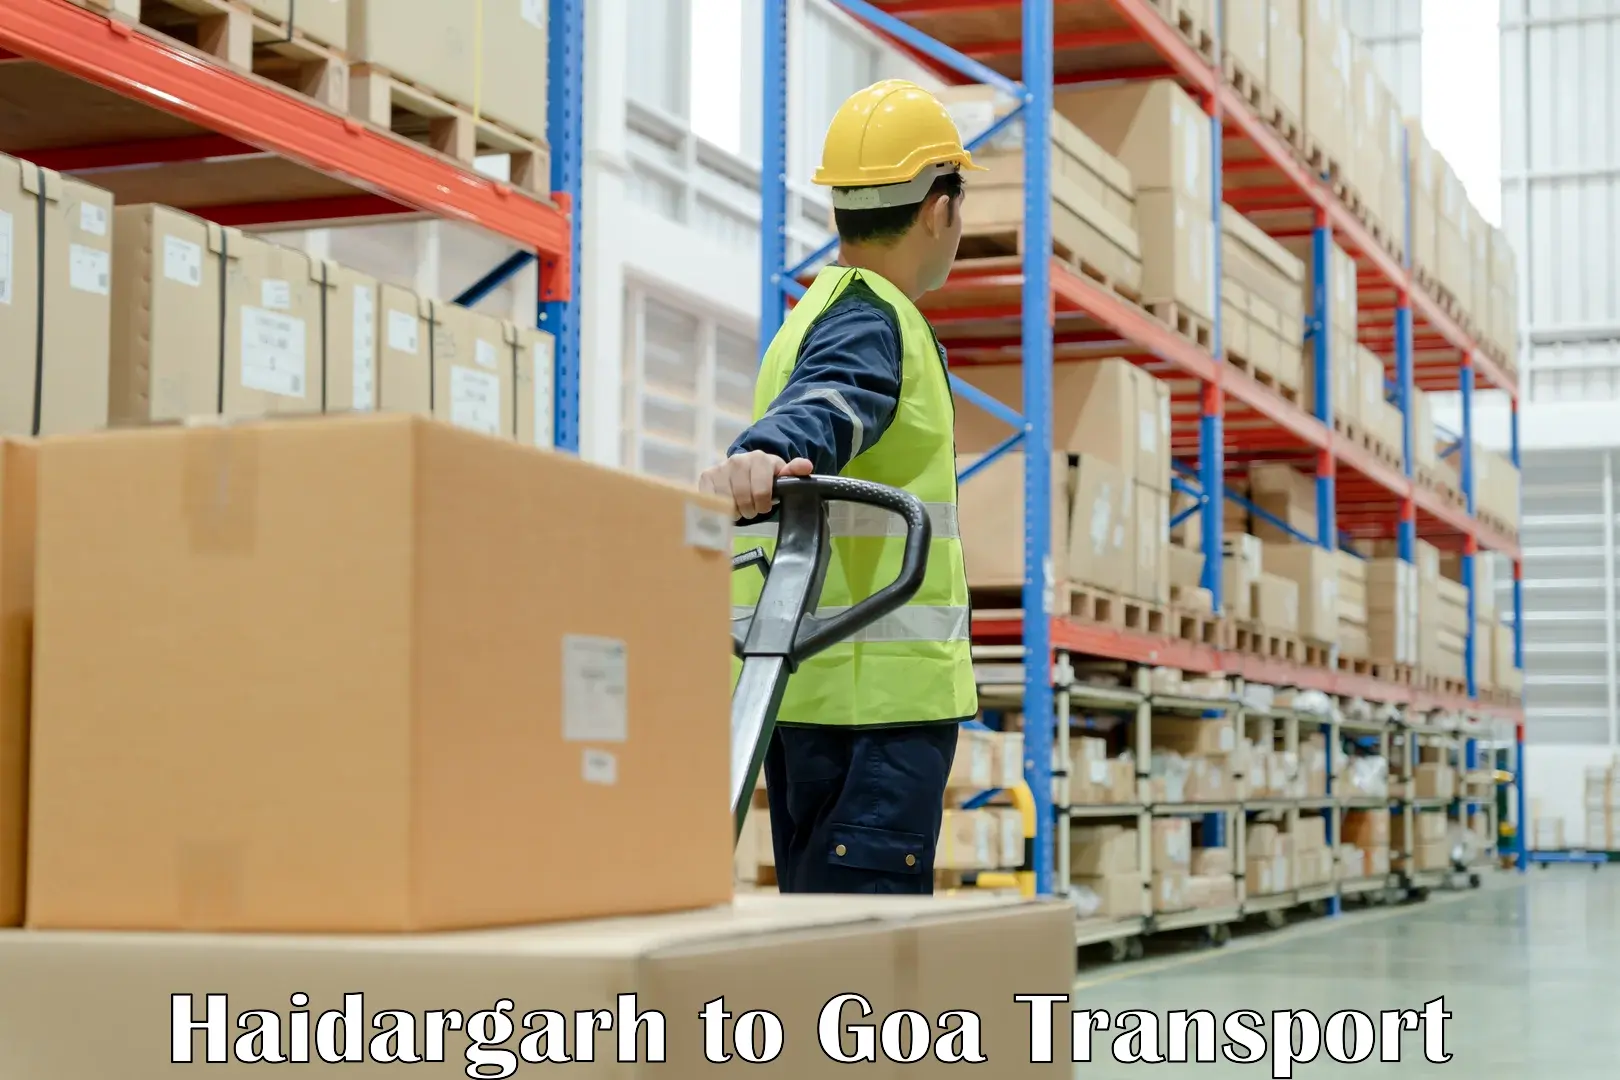 Online transport service Haidargarh to Goa University